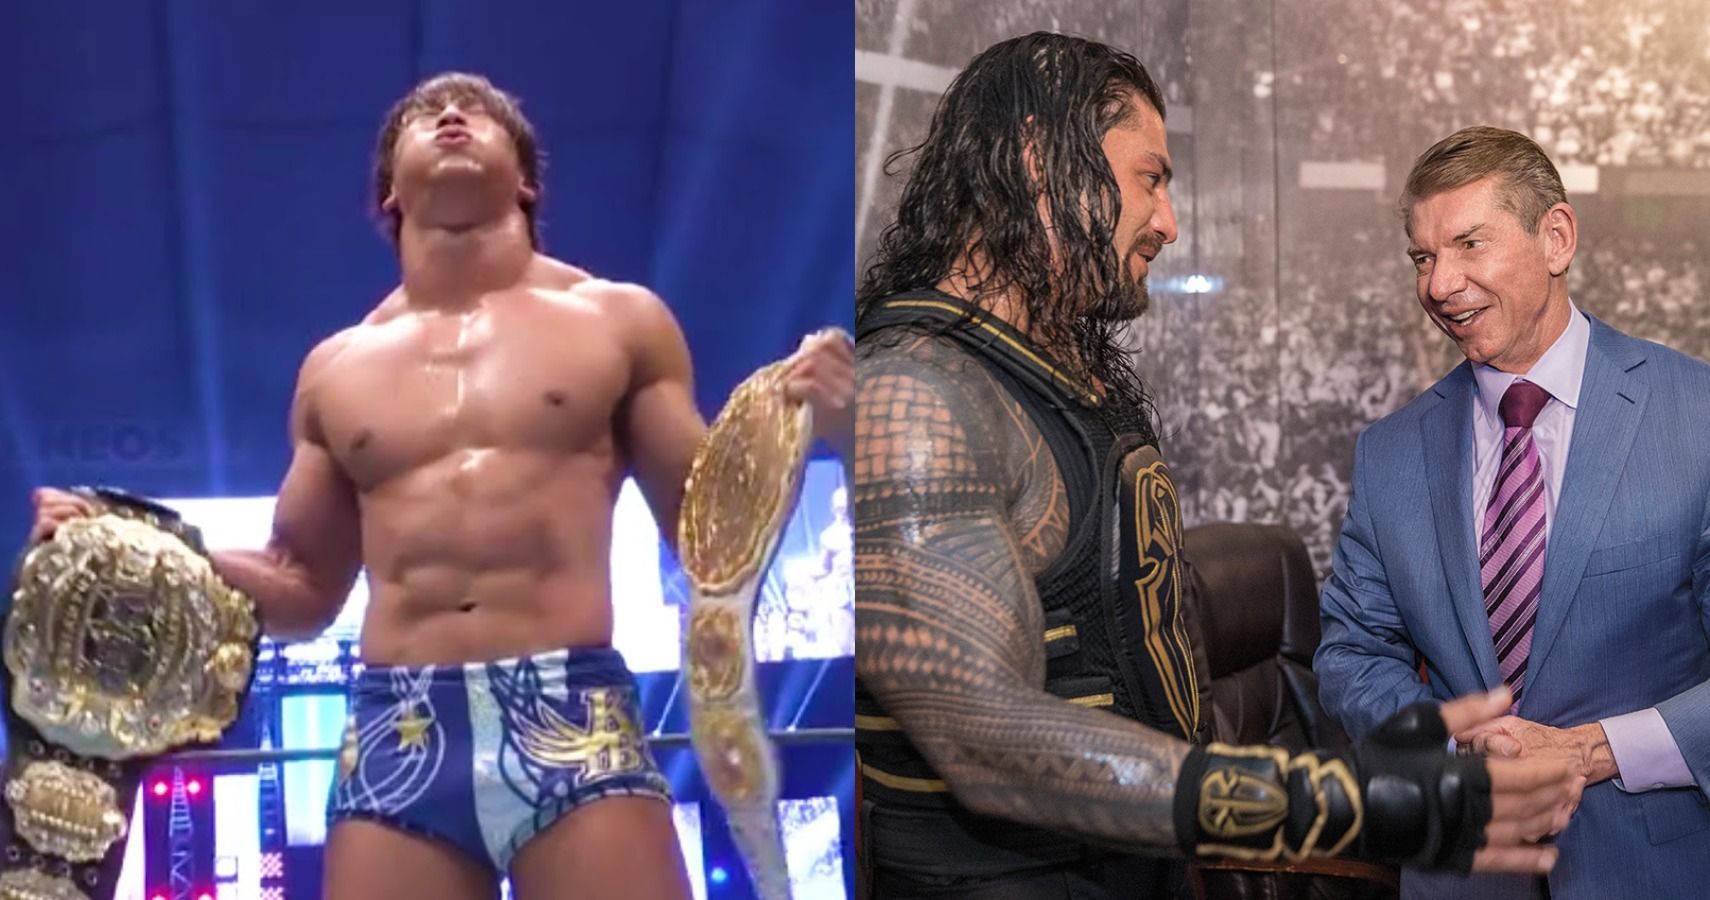 Kota Ibushi NJPW Roman Reigns And Vince McMahon WWE